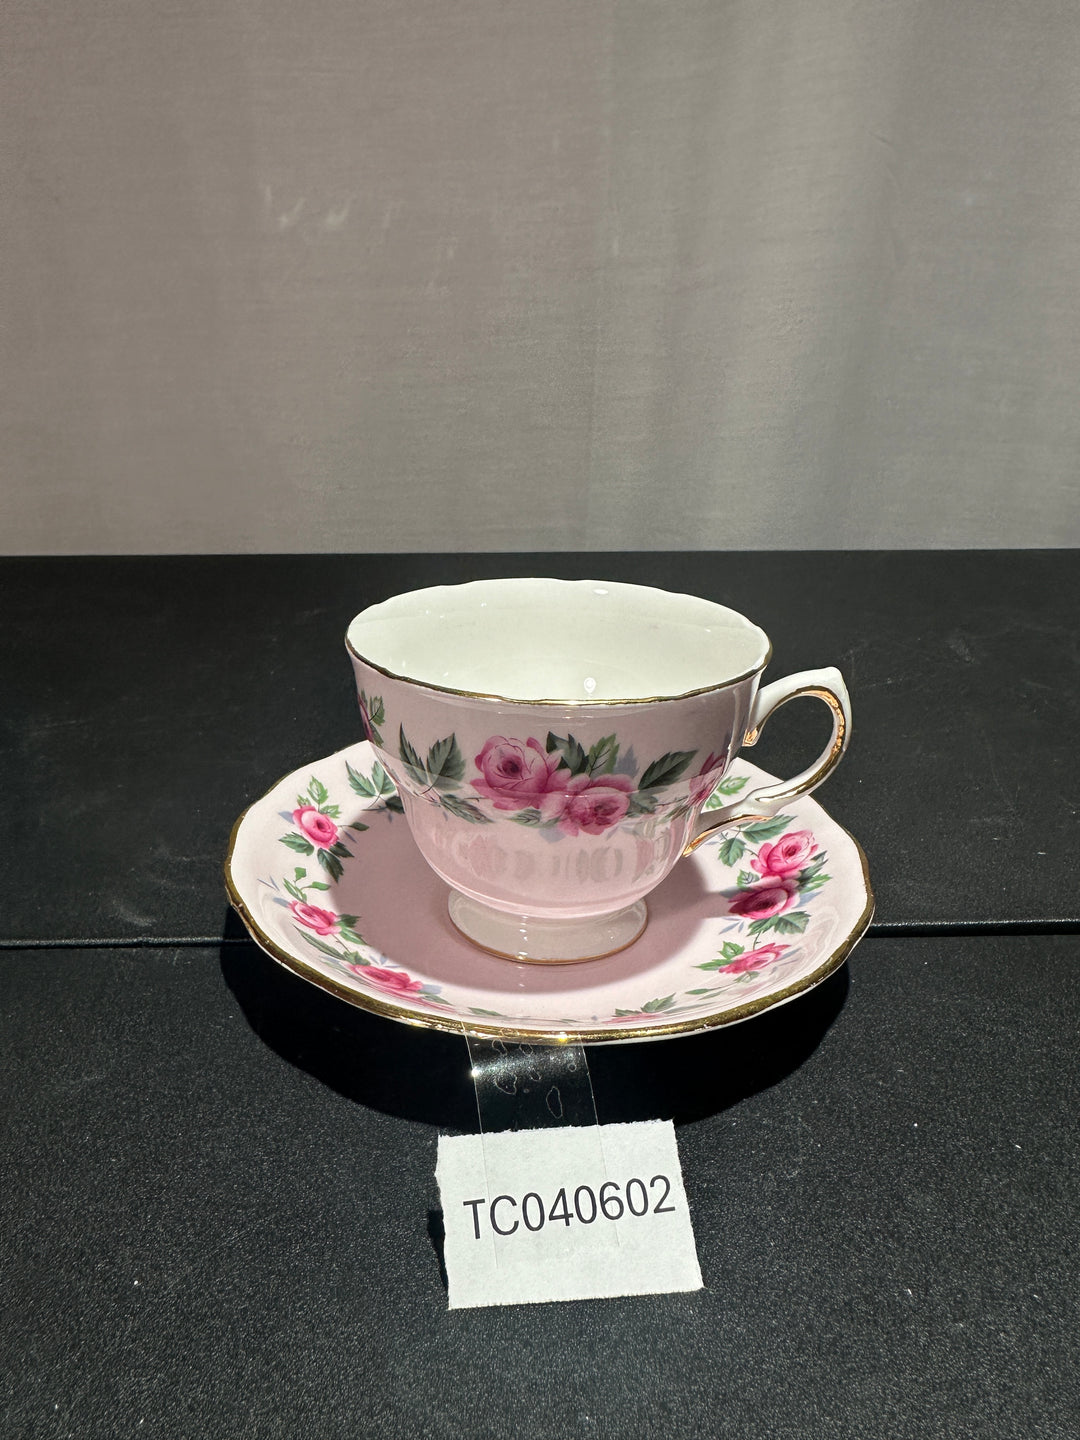 Tea Cup TC040602